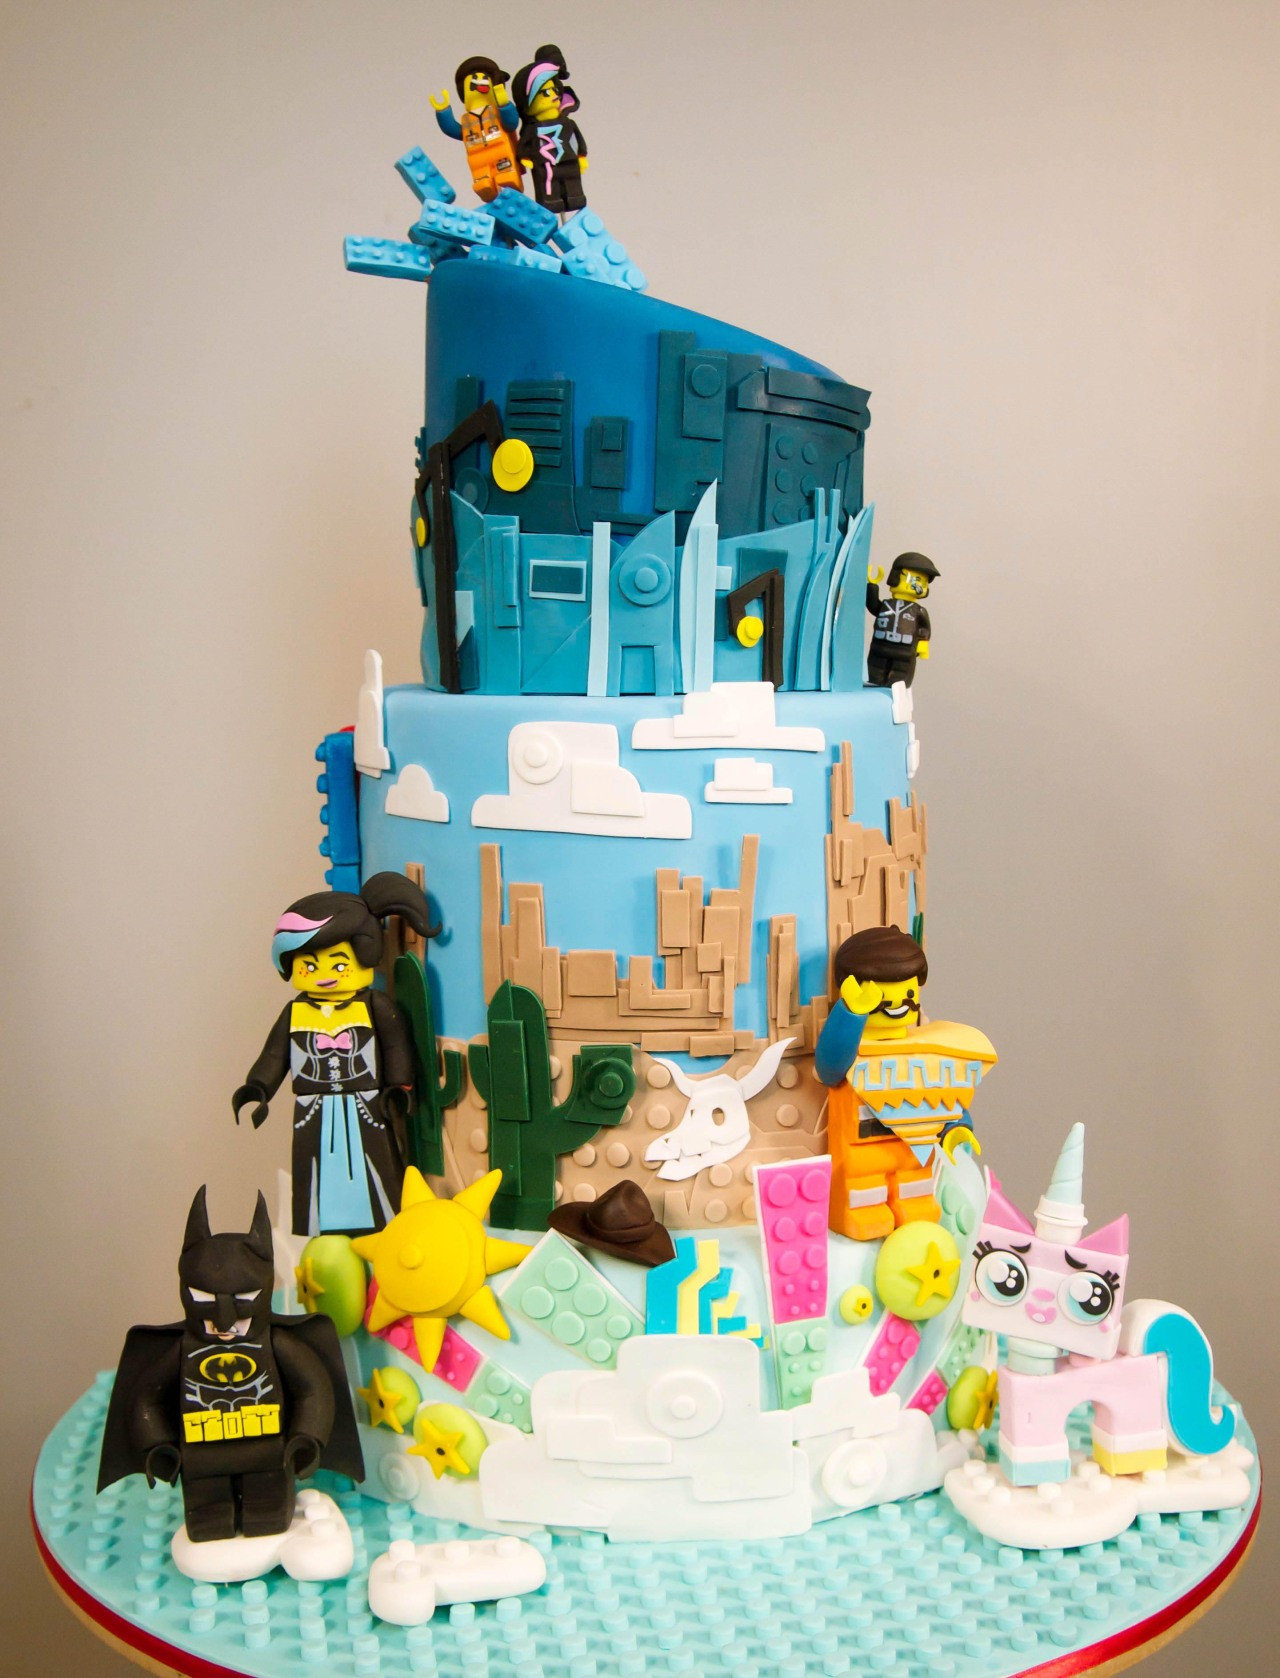 Lego Movie Birthday Cake
 Everything is Awesome Holy Lego Movie Batman A